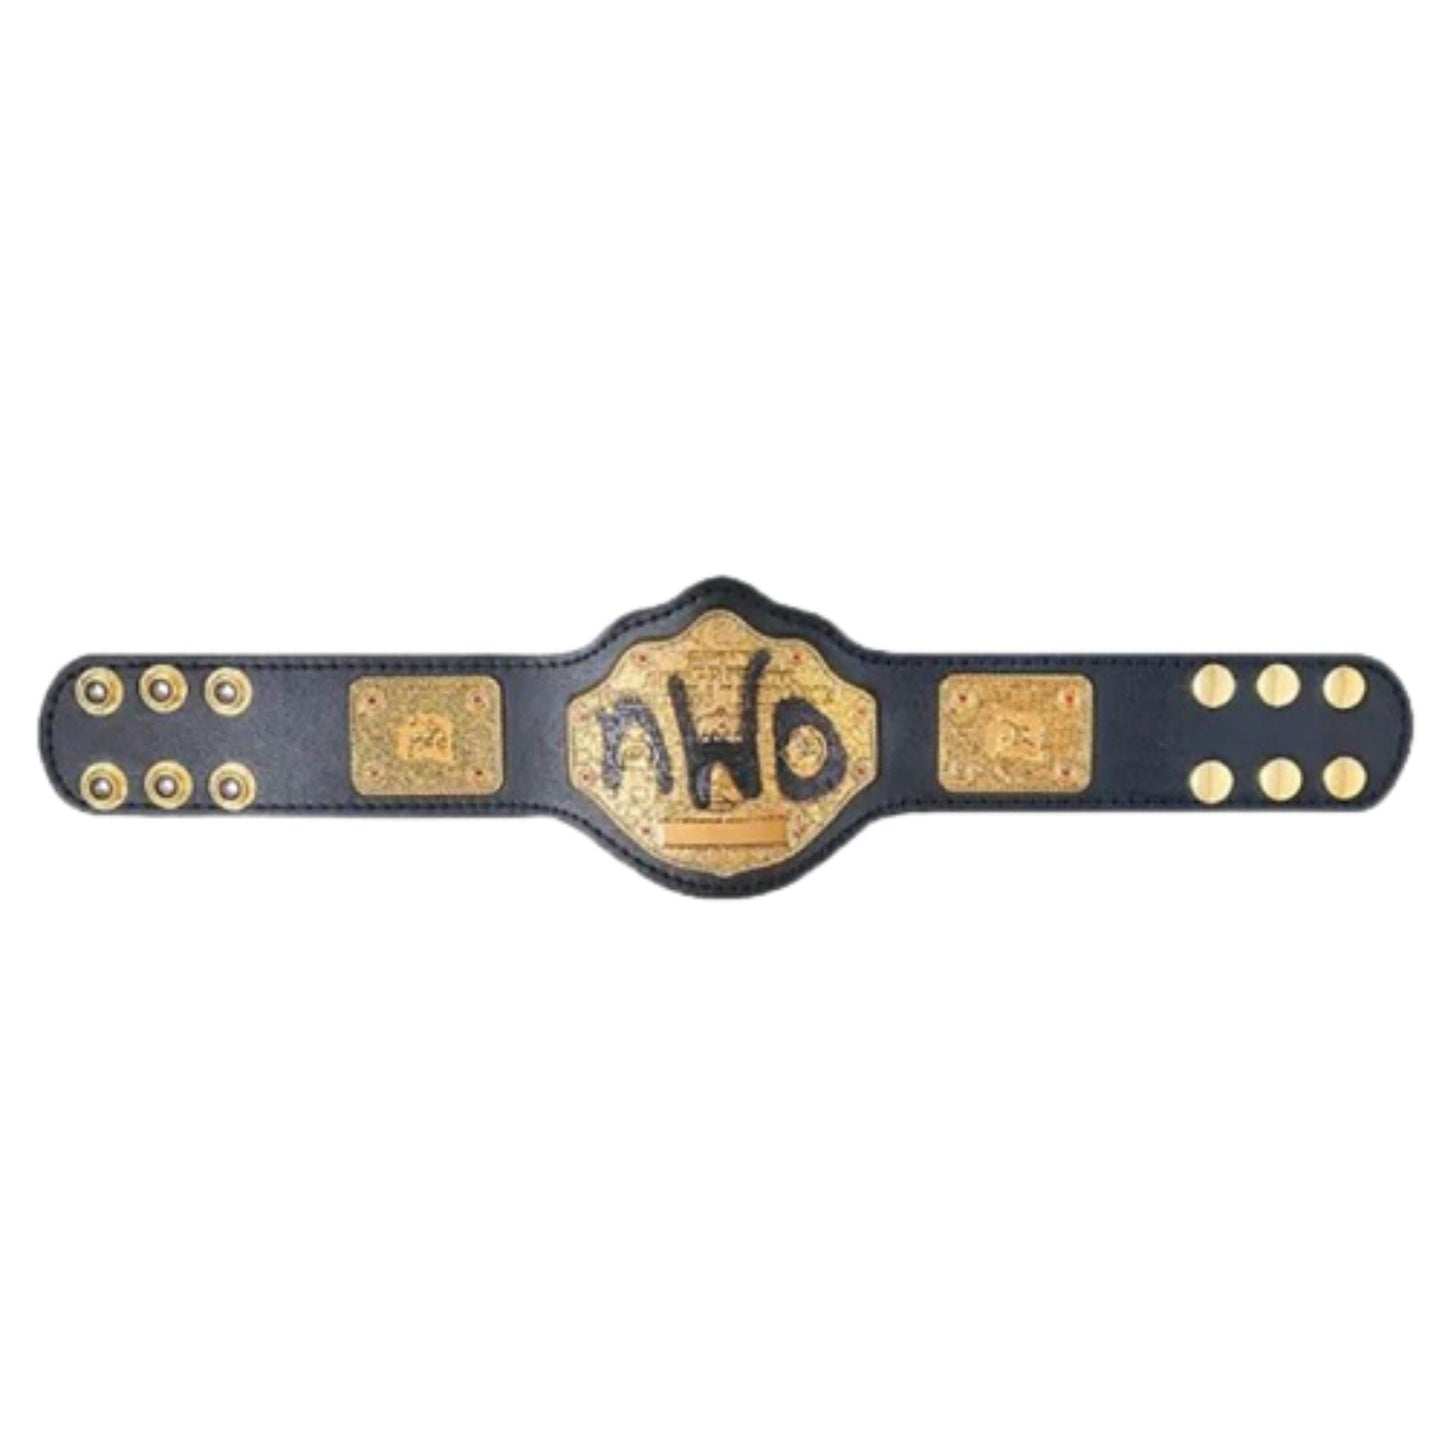 NWO Logo Spray Paint Championship Kids Replica Title Belt